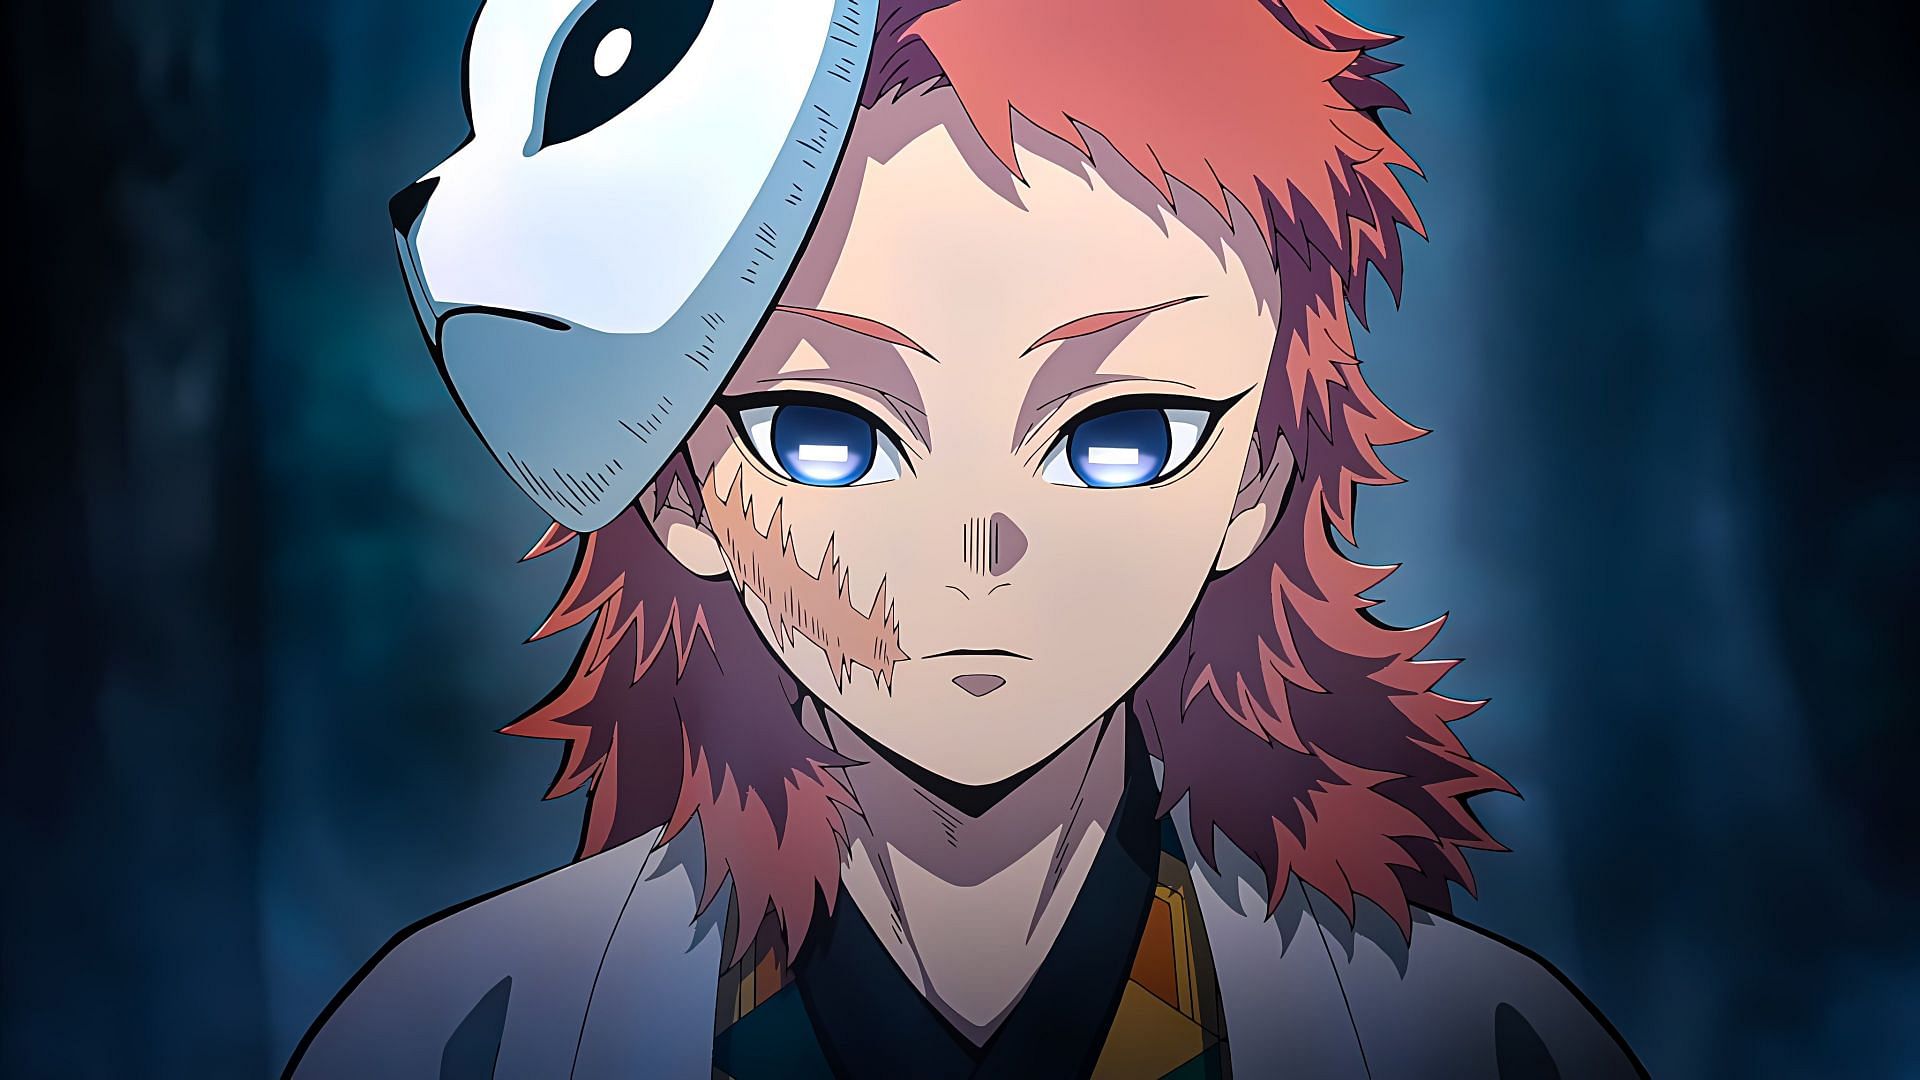 Sabito as seen in the anime (image via Ufotable)